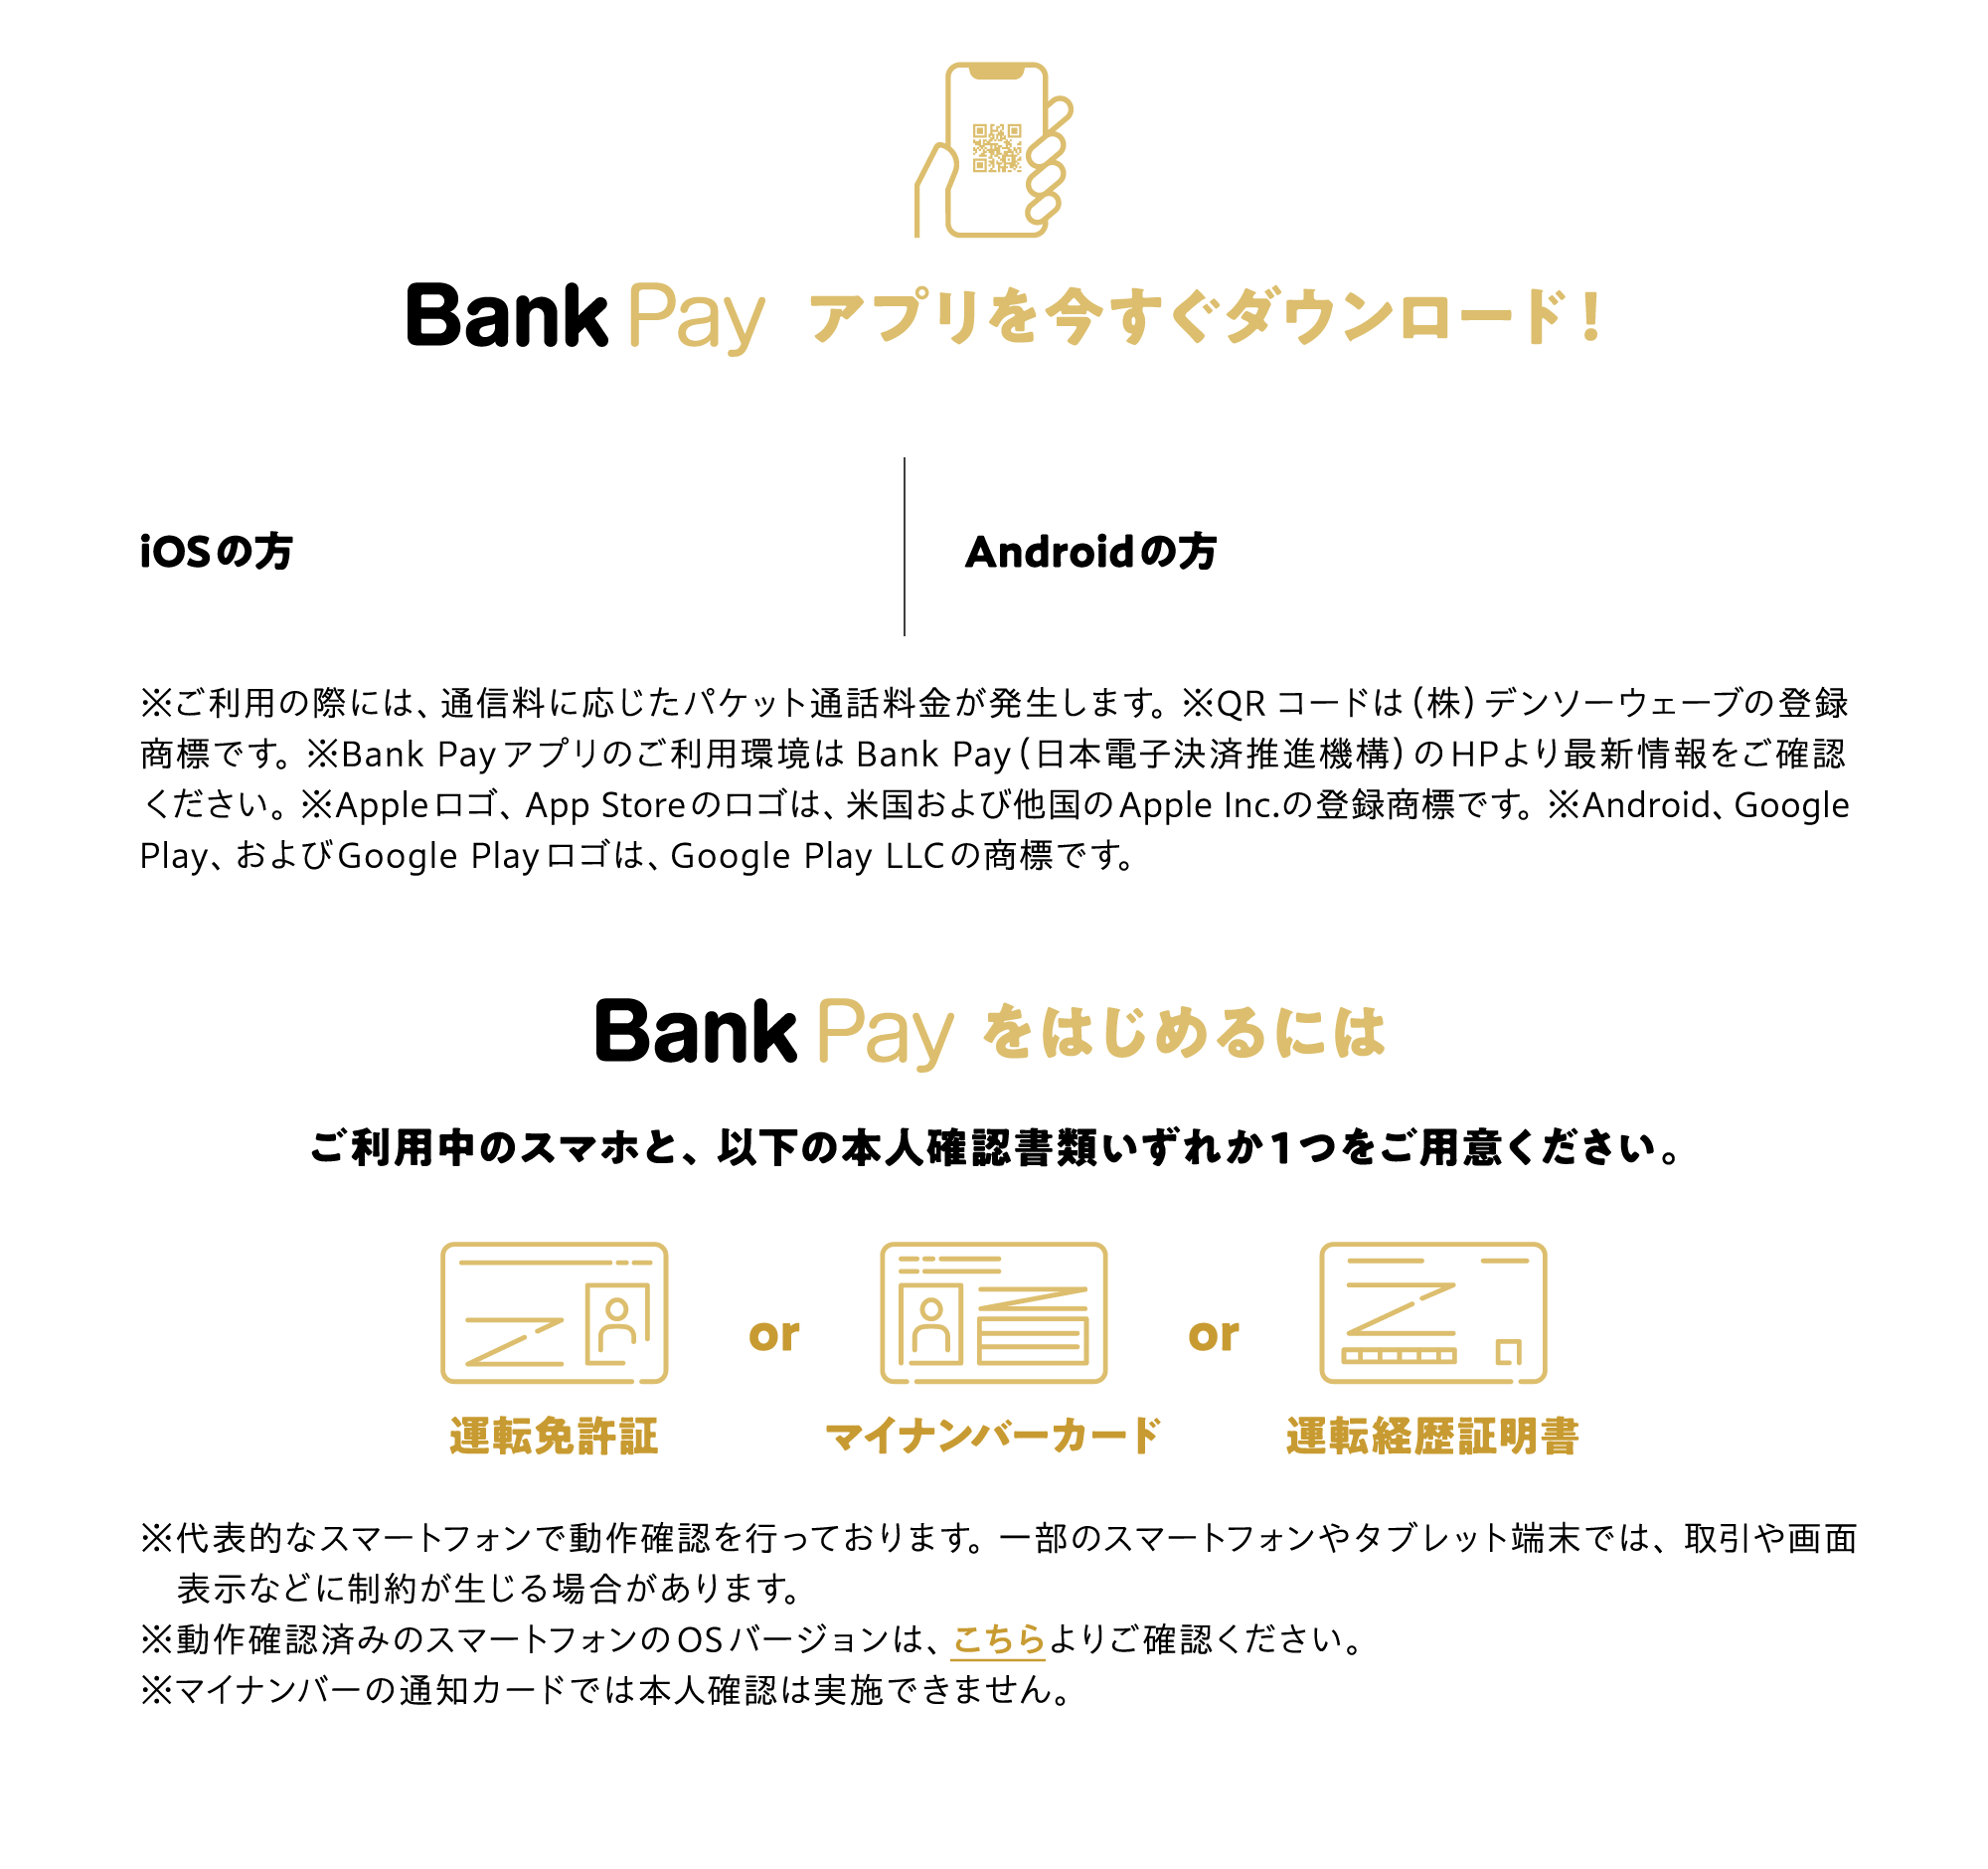 Bank Pay アプリを今すぐダウンロード